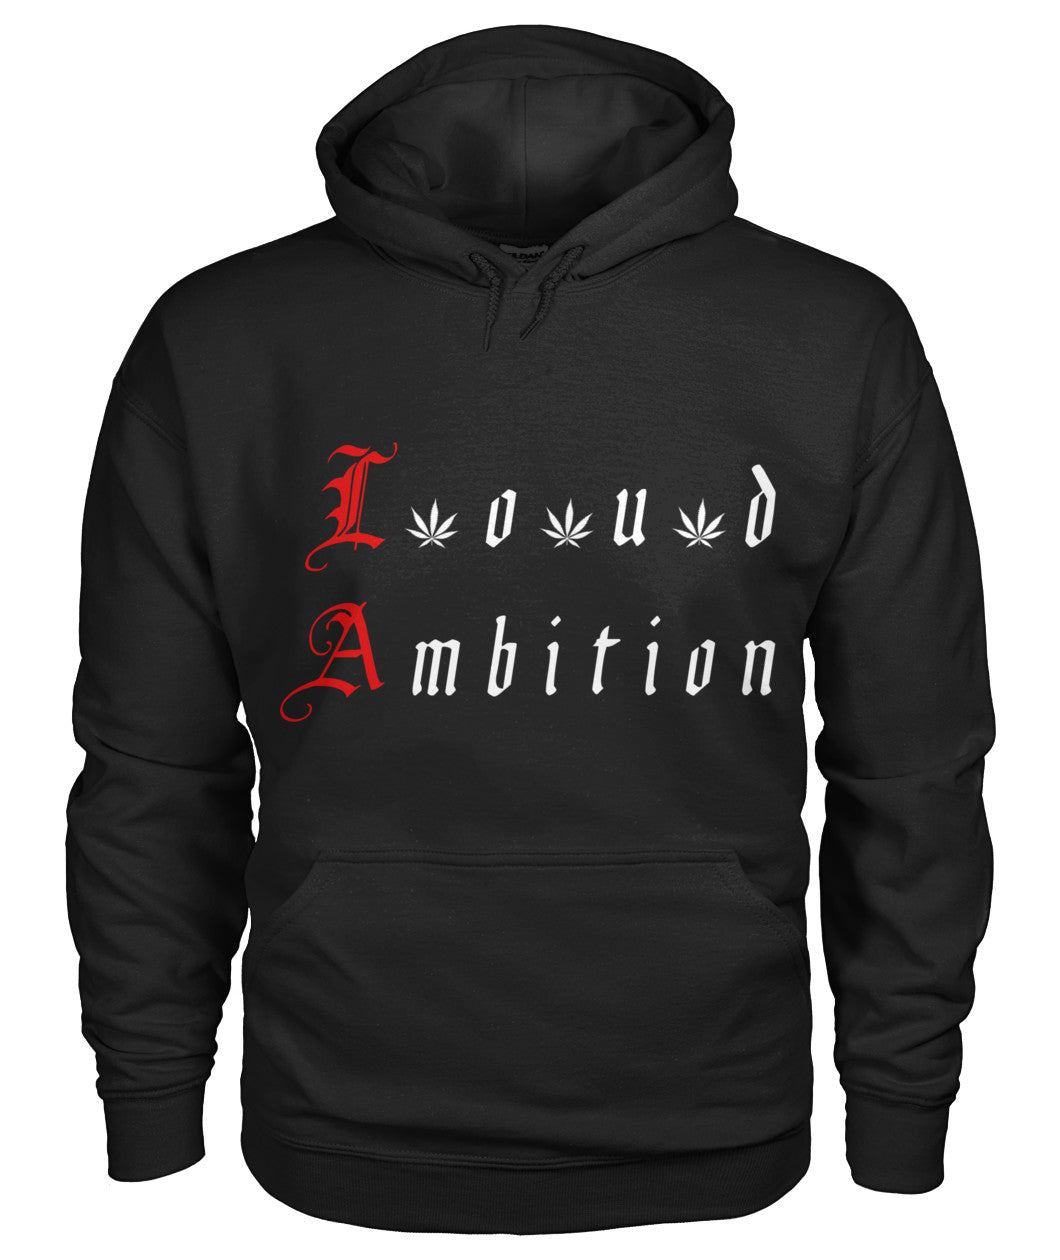 Loud Ambition (Hoodies)